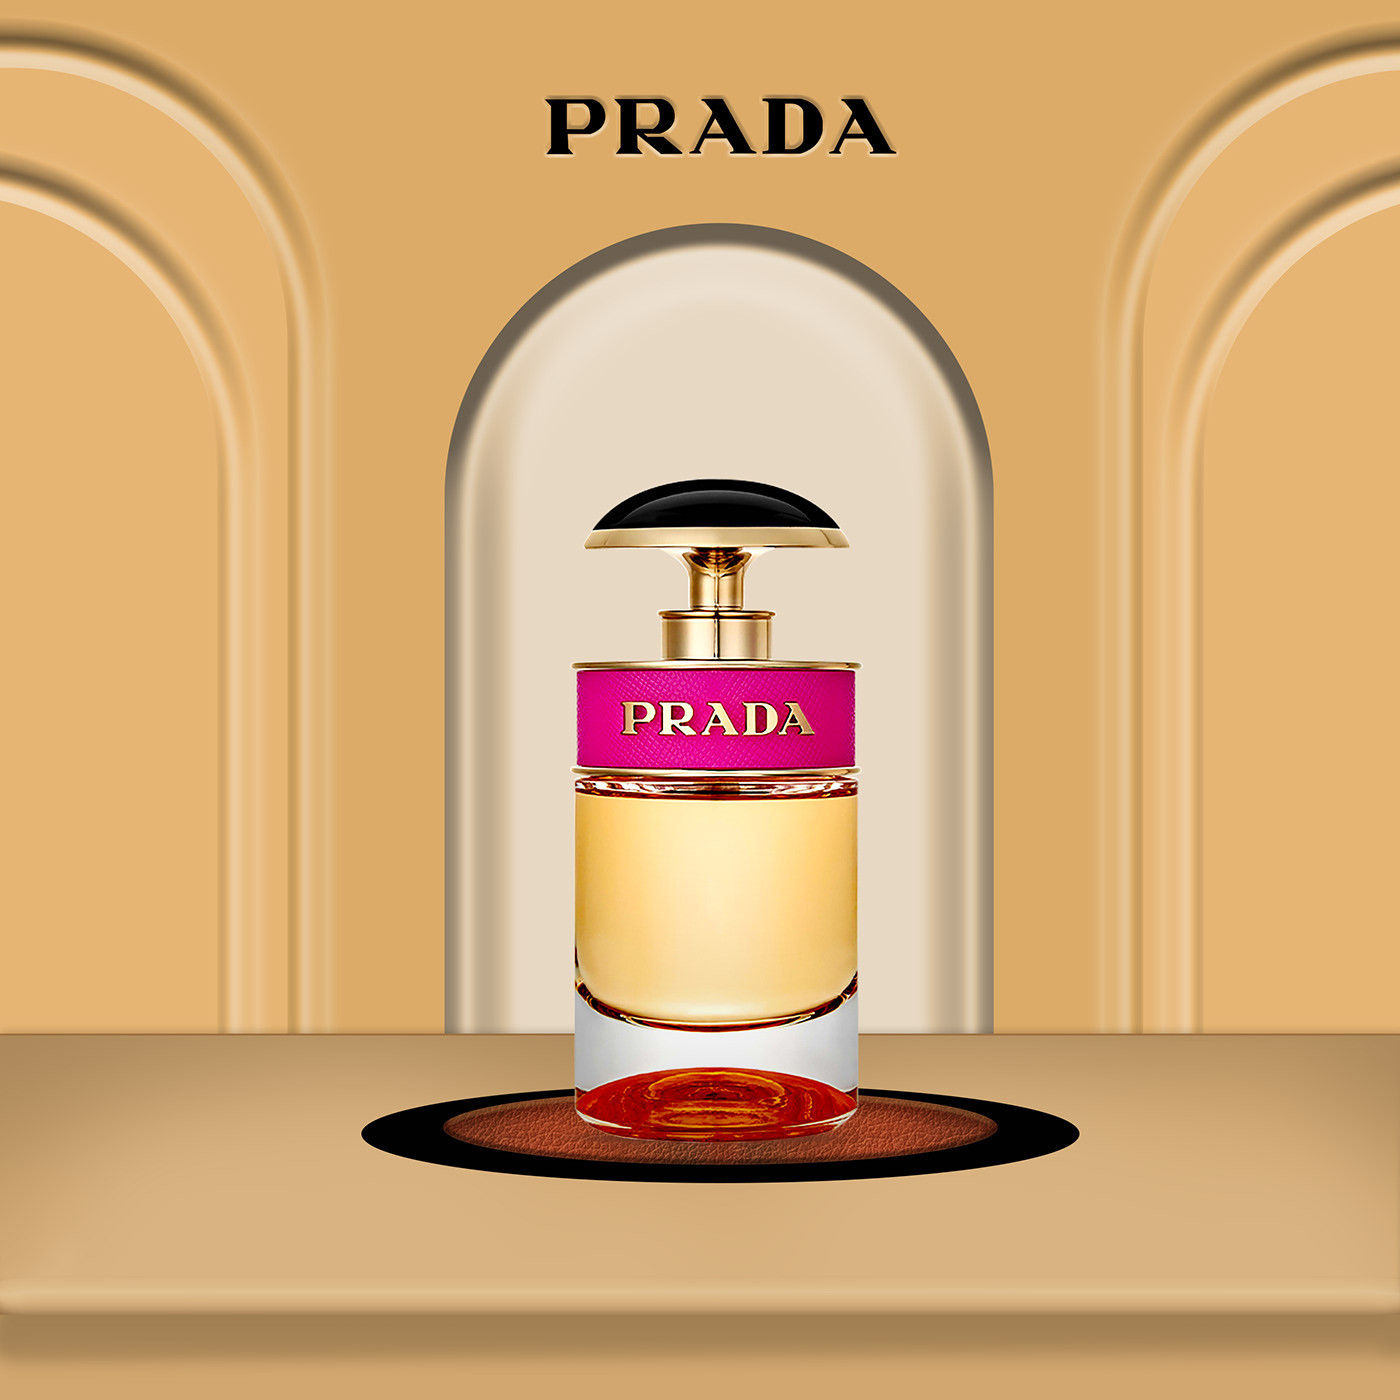 Social media post parfum perfume VERSACE prada podium graphic design  kilian design creed